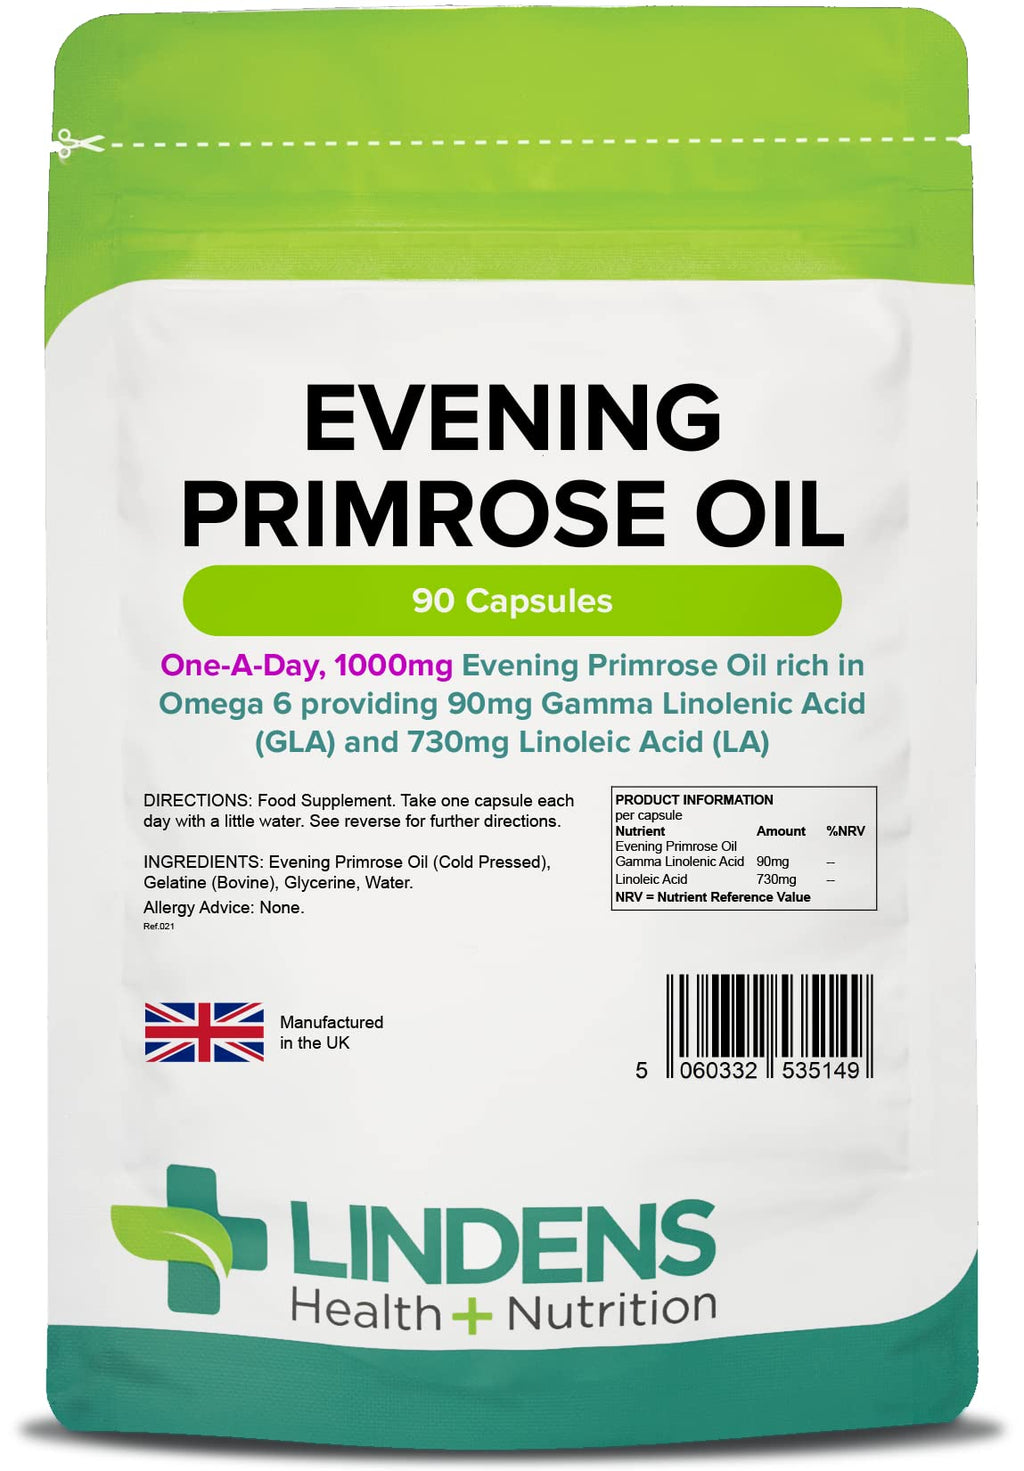 [Australia] - Lindens Evening Primrose Oil 1000mg Capsules - 90 Pack - High Strength, Popular with Women Contains Linoleic Acid & Gamma Linoleic Acid - UK Manufacturer, Letterbox Friendly 